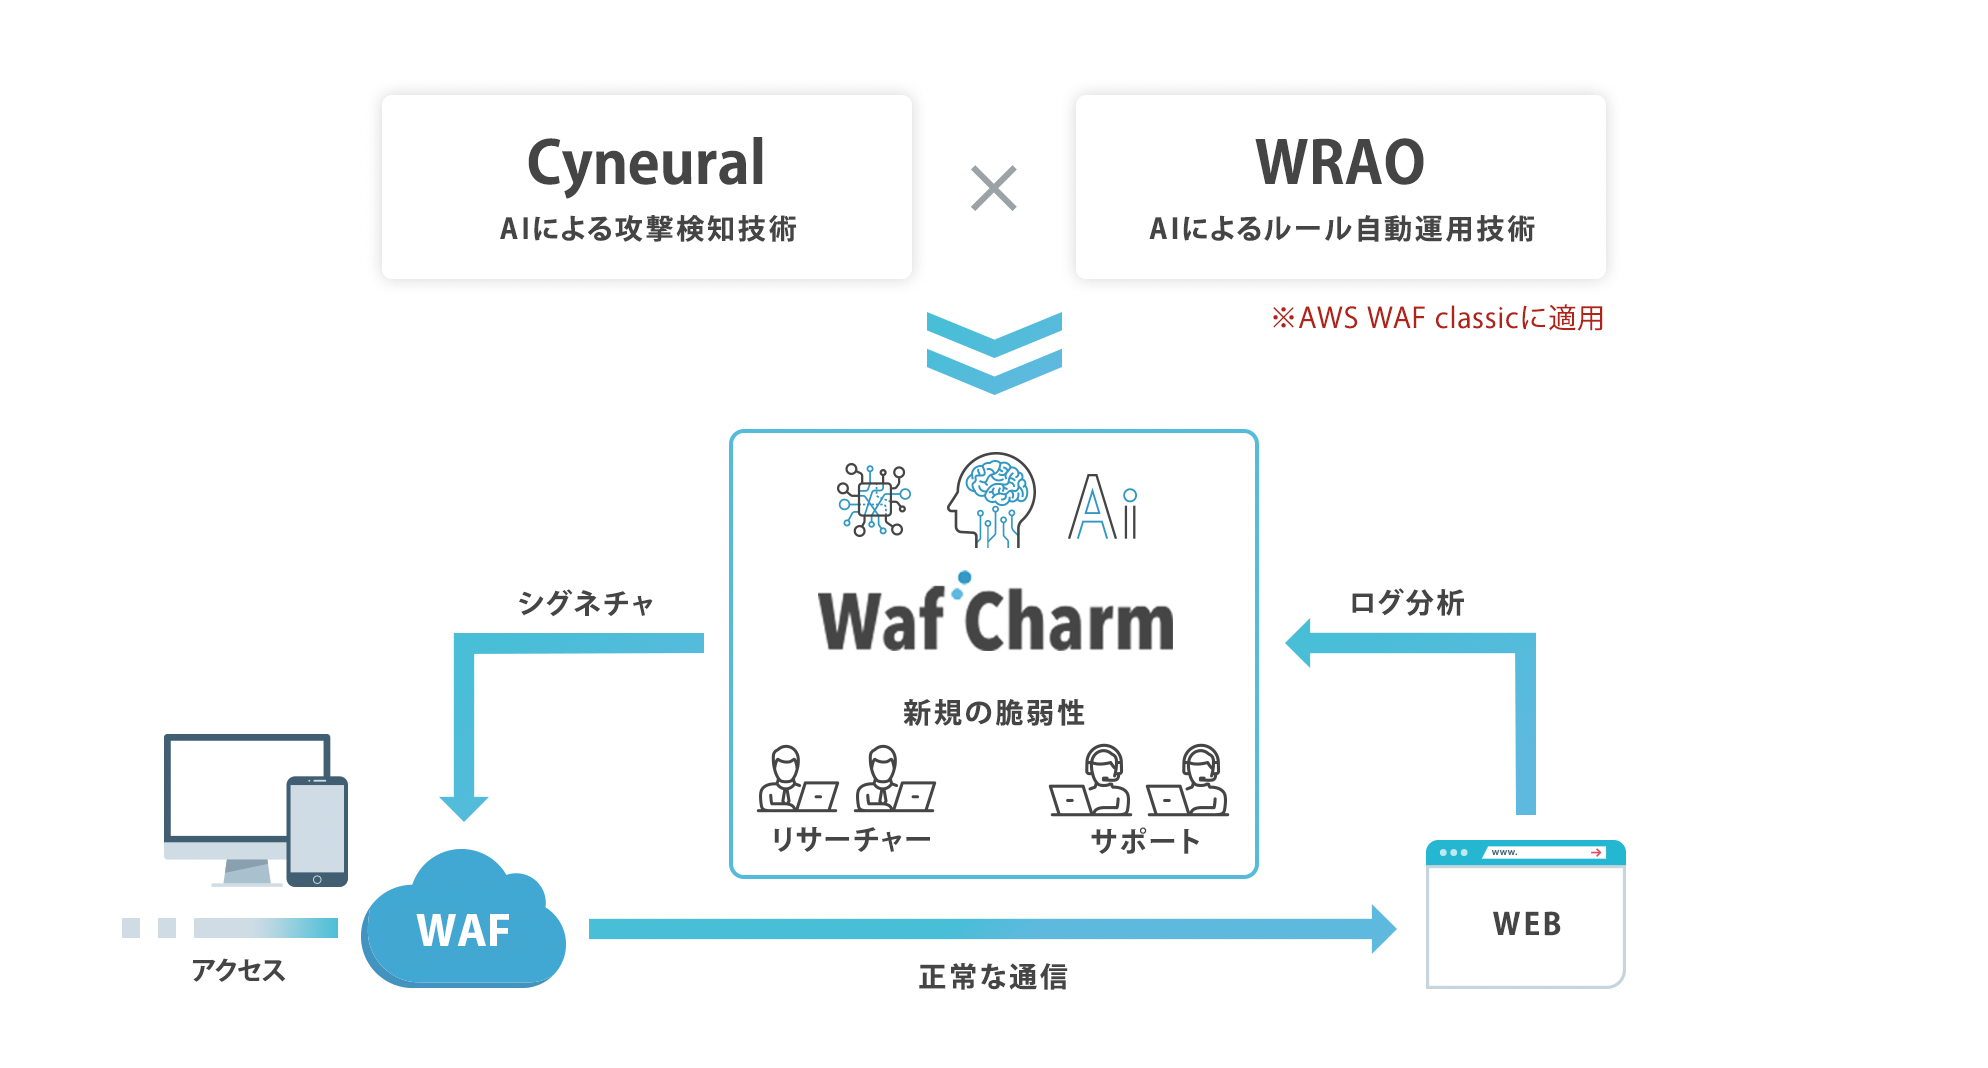 AI ×ビッグデータによるWAF自動運用＝ WafCharm